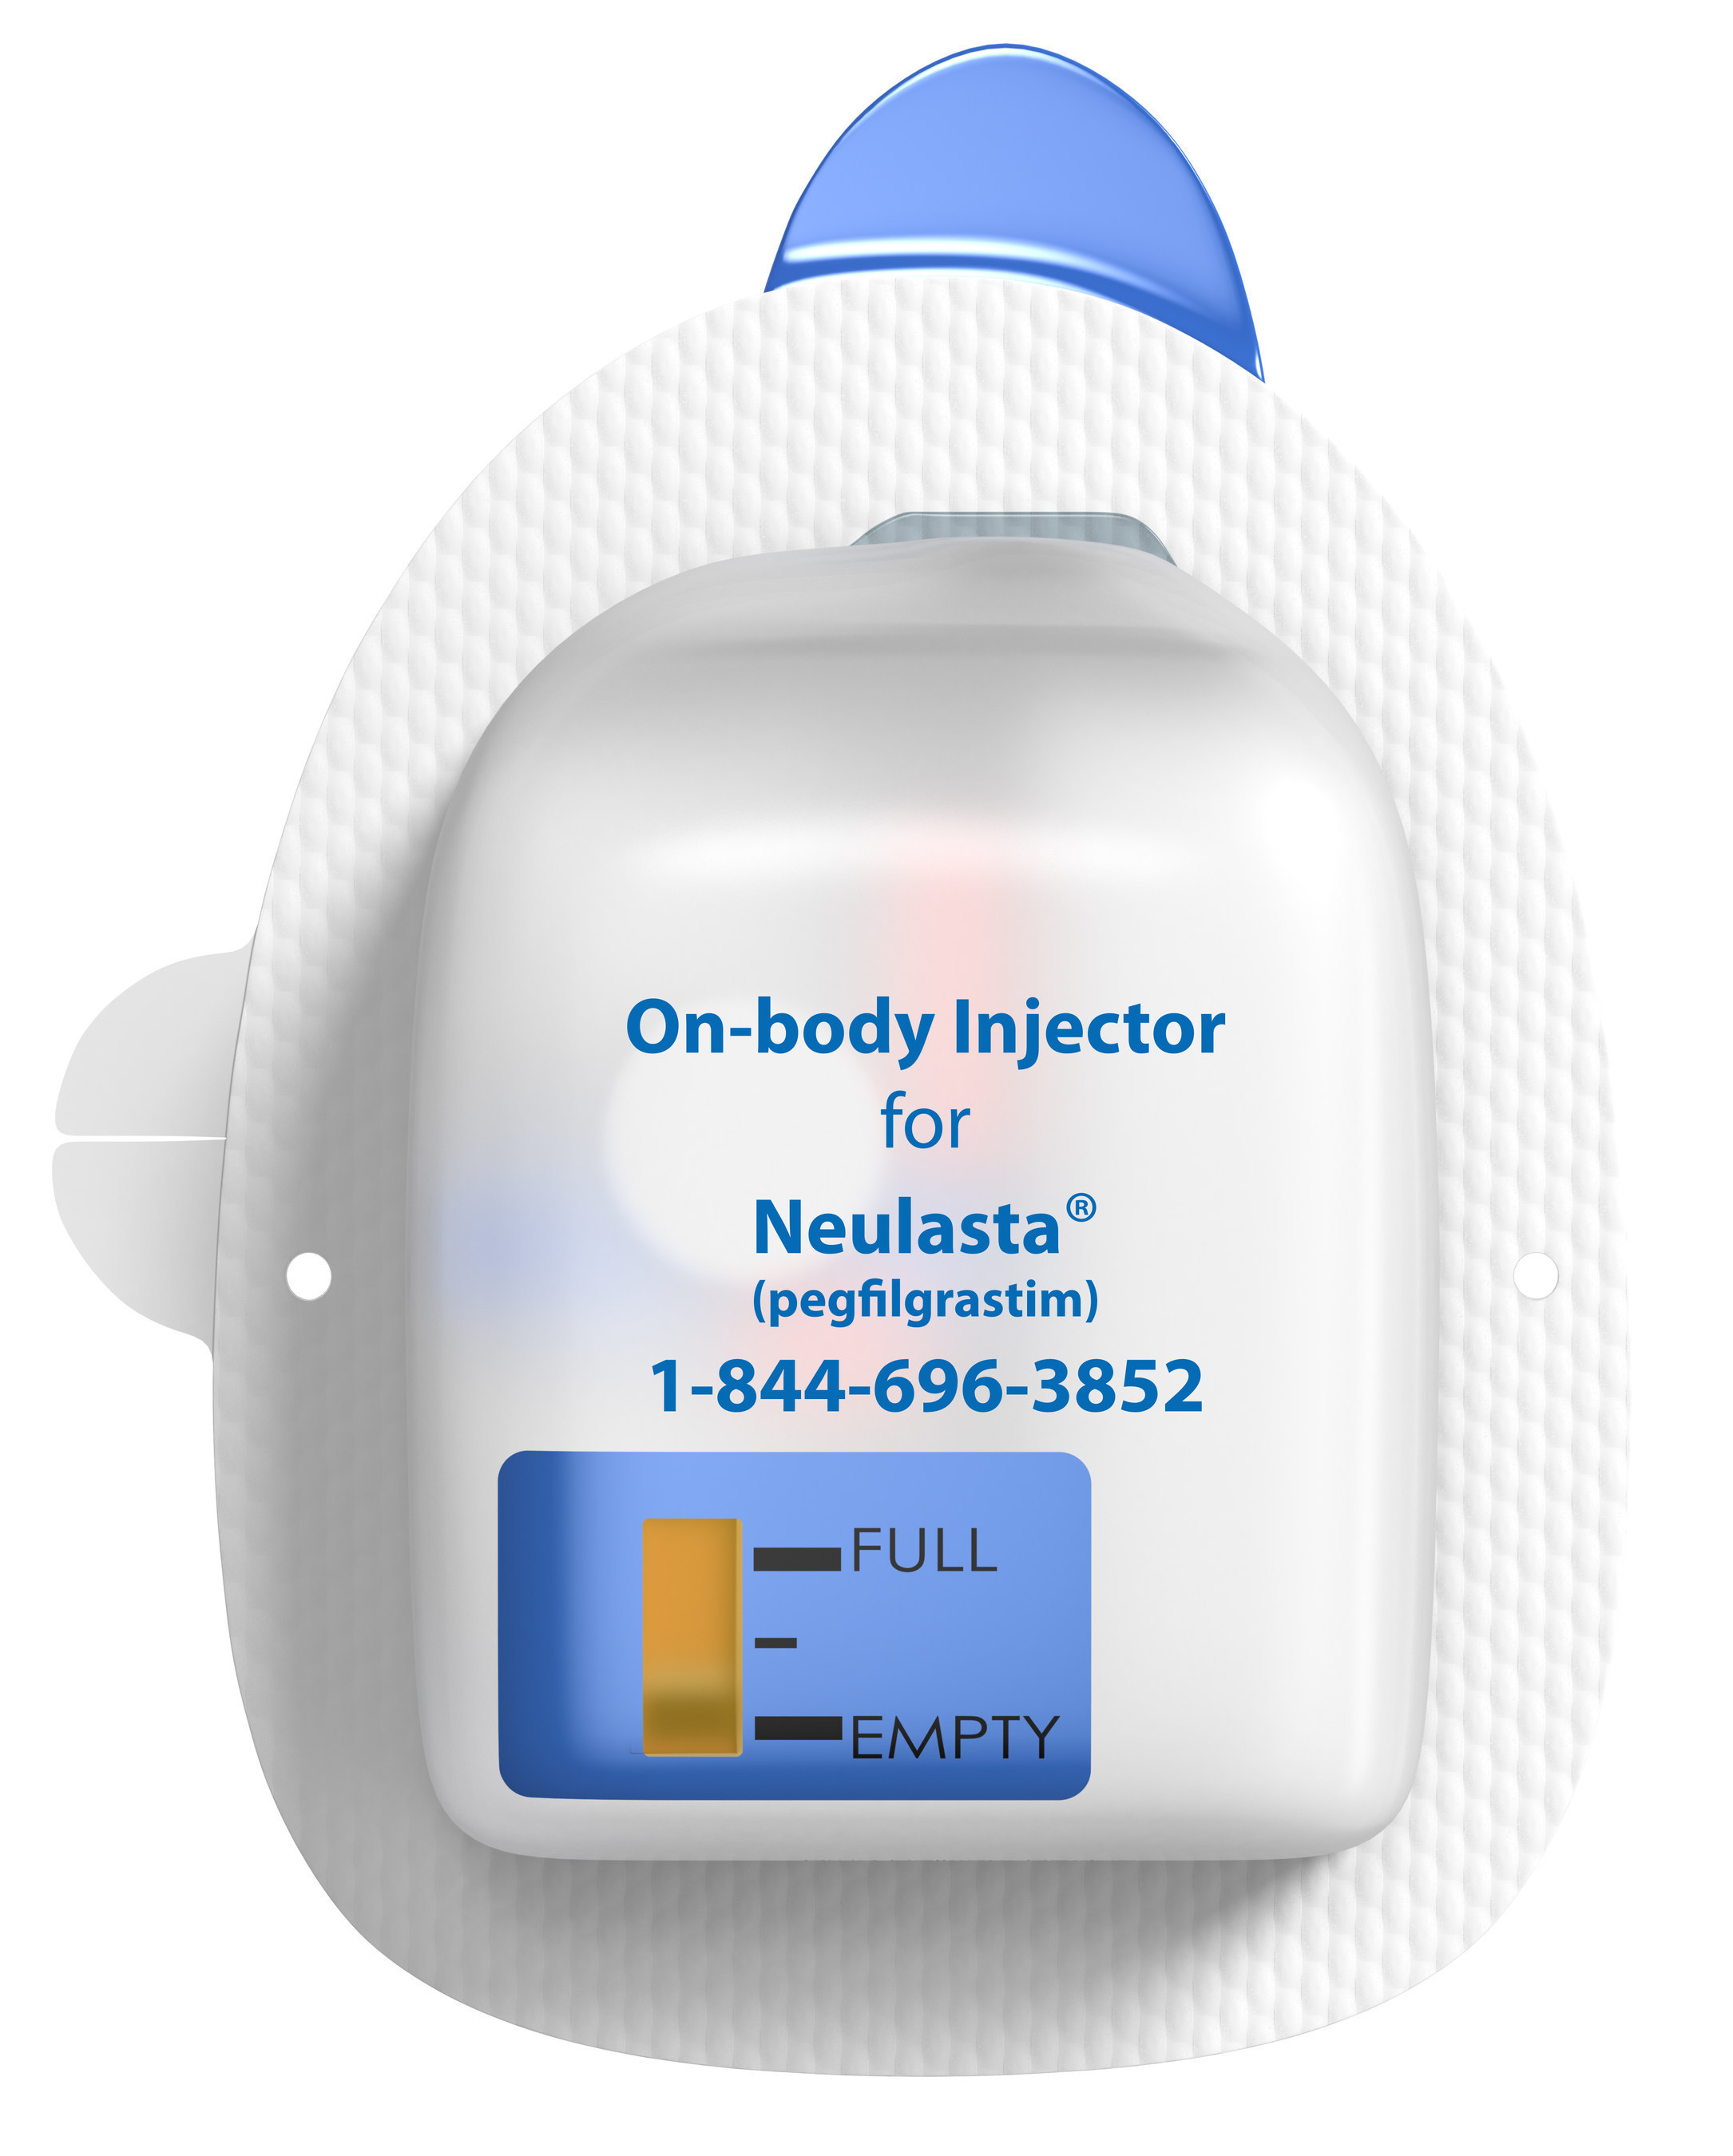 Amgen Announces Launch Of New Neulasta® (Pegfilgrastim) Delivery Kit